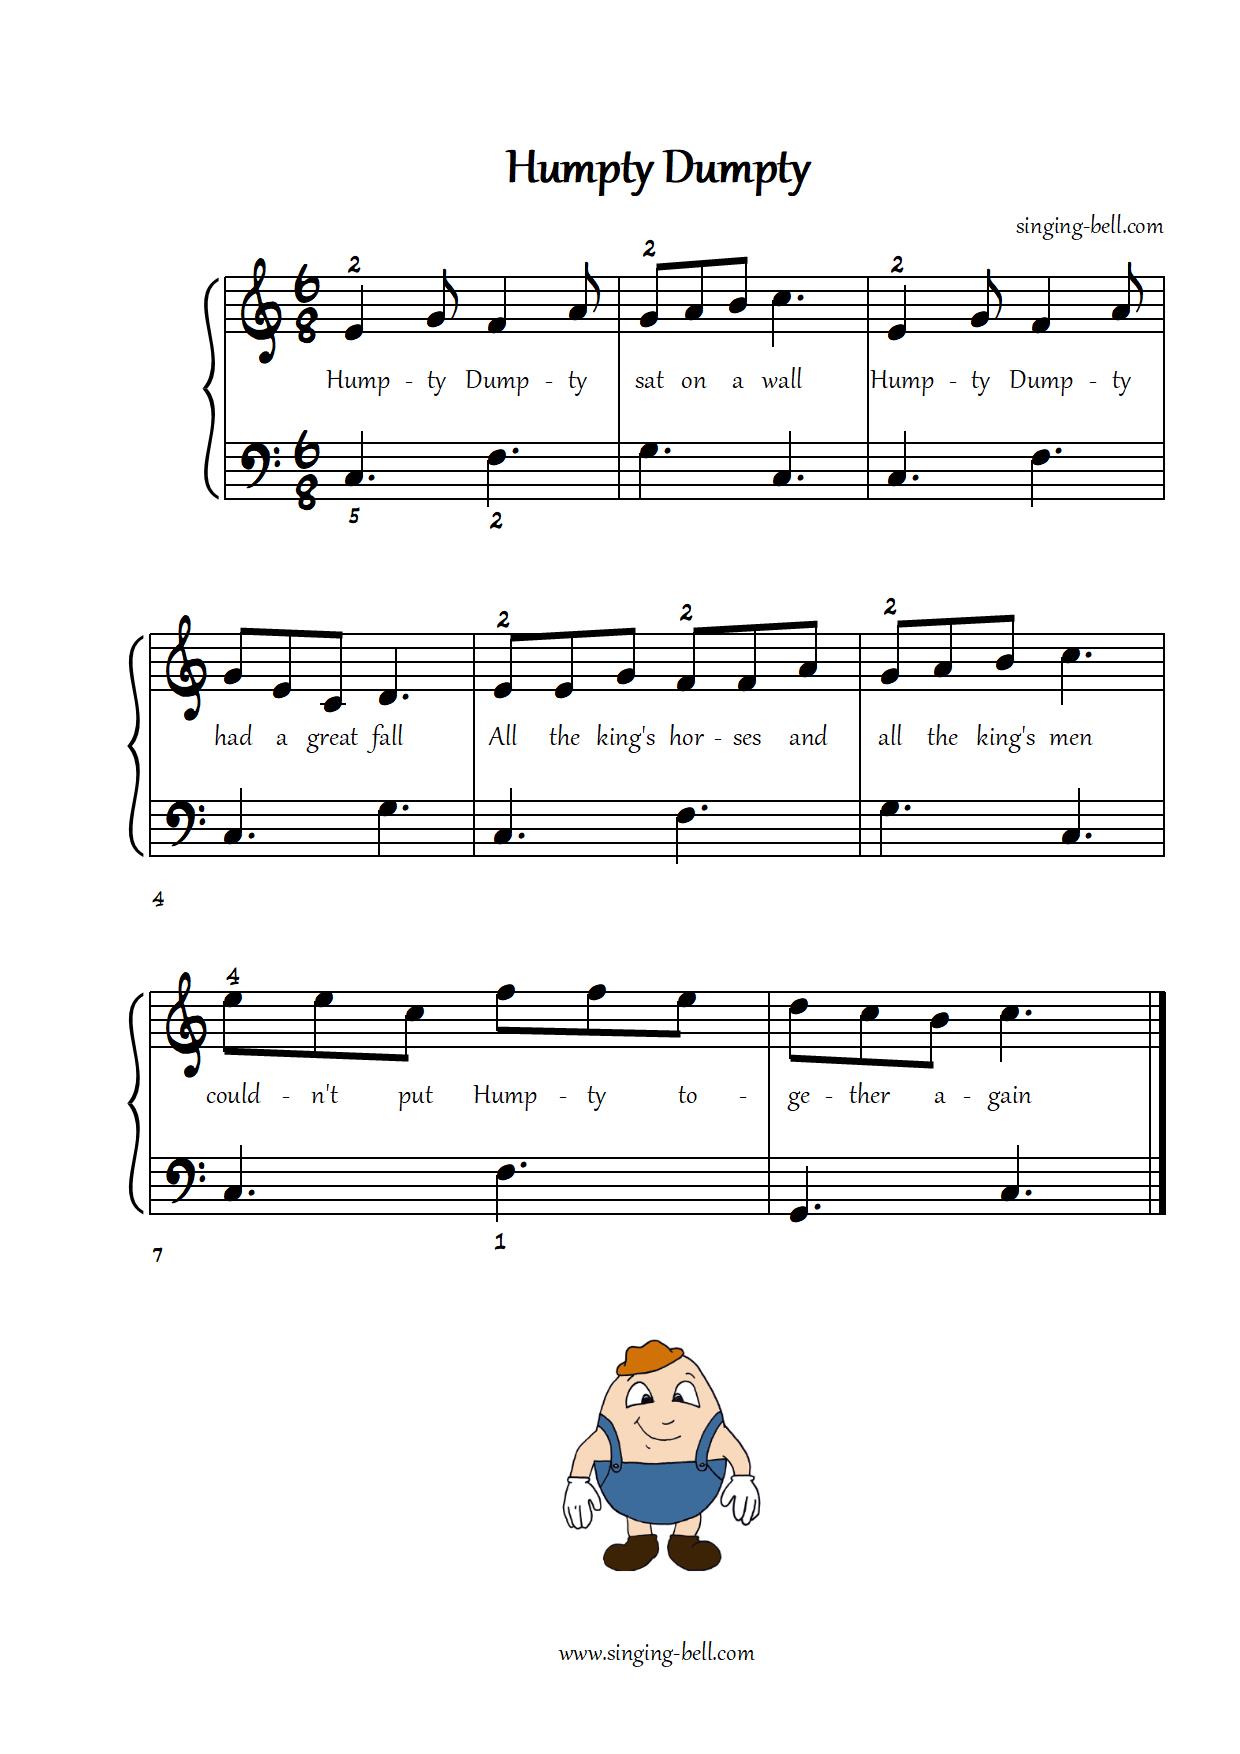 Humpty-Dumpty easy piano sheet music notes chords beginners pdf